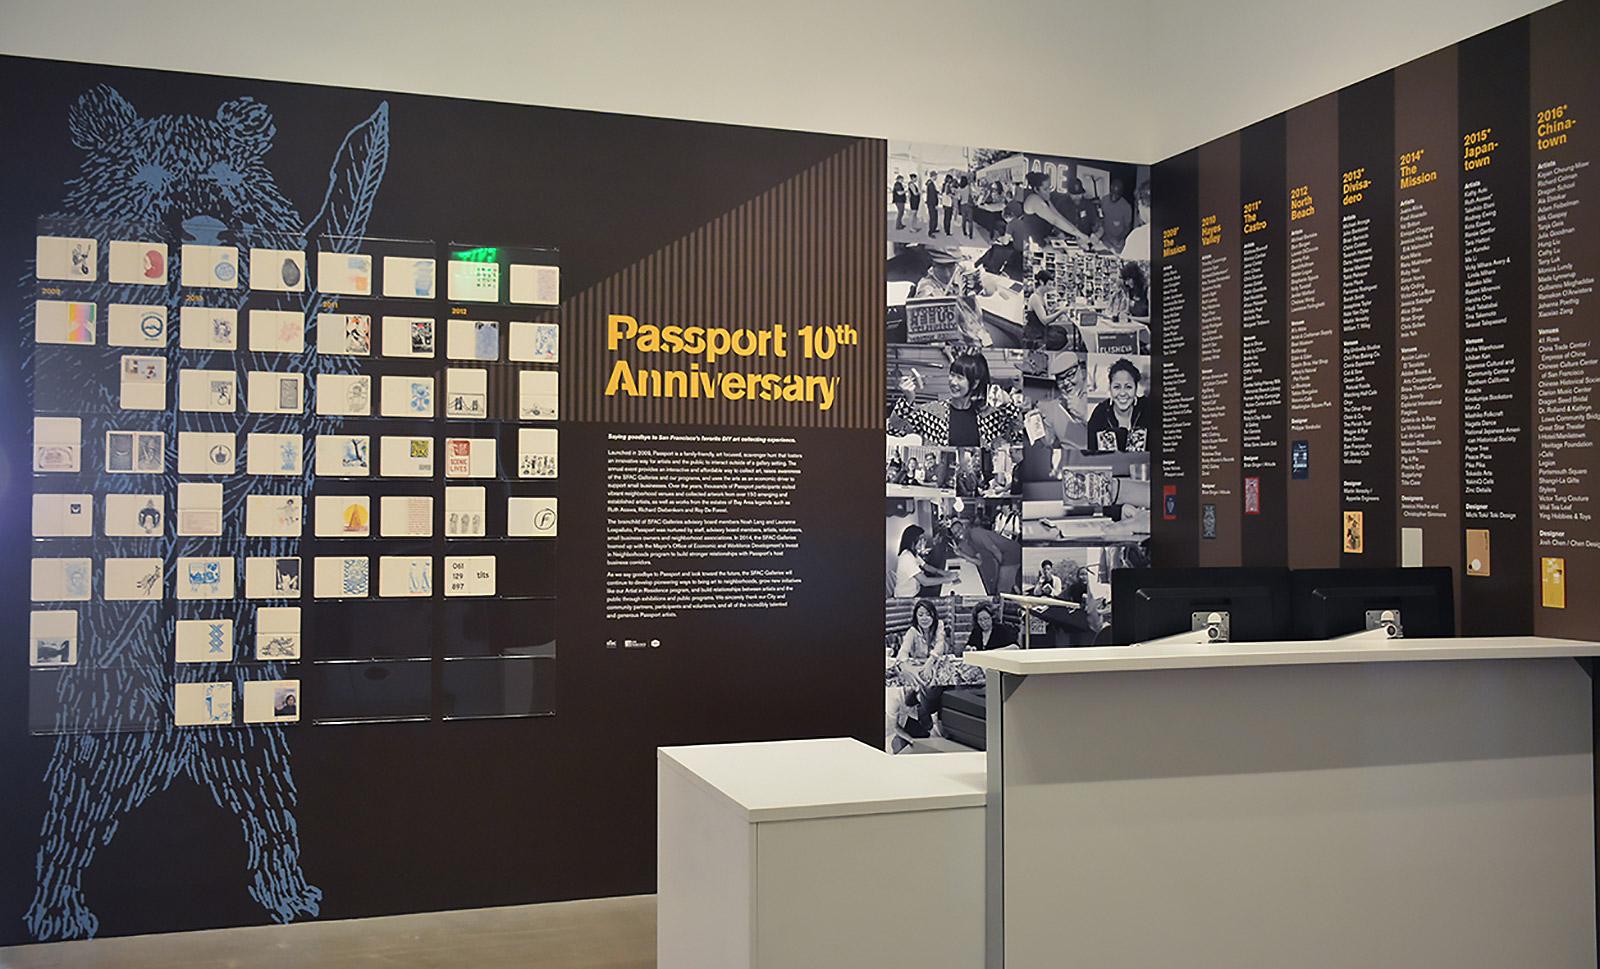 SFAC Main Gallery exhibit: 9 years of Passport event stamps